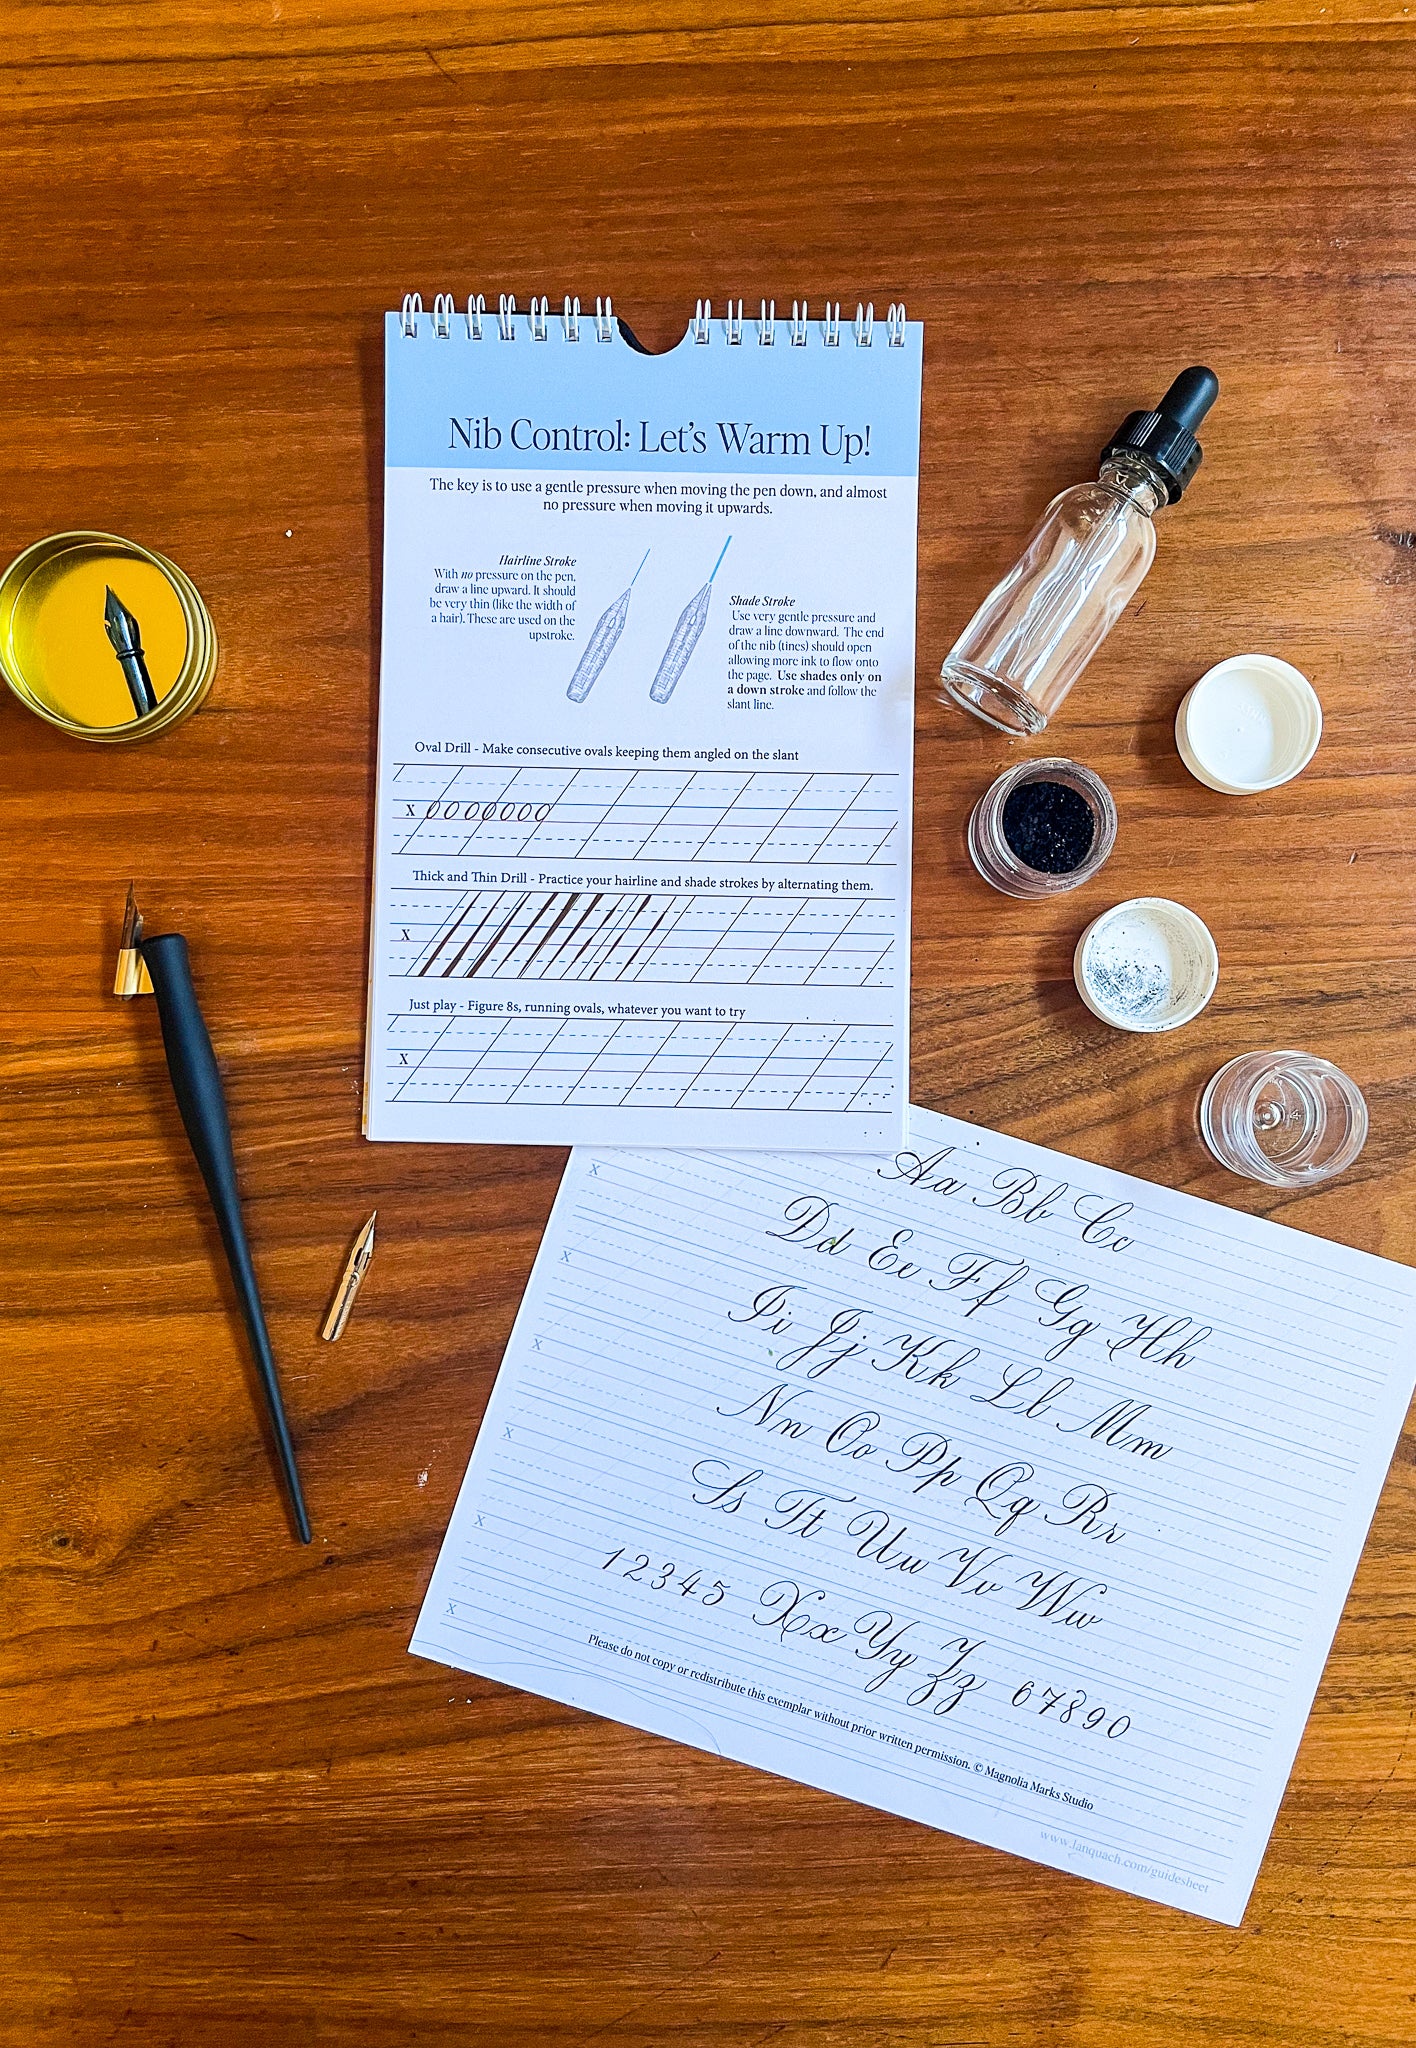 Calligraphy Kit, Kits